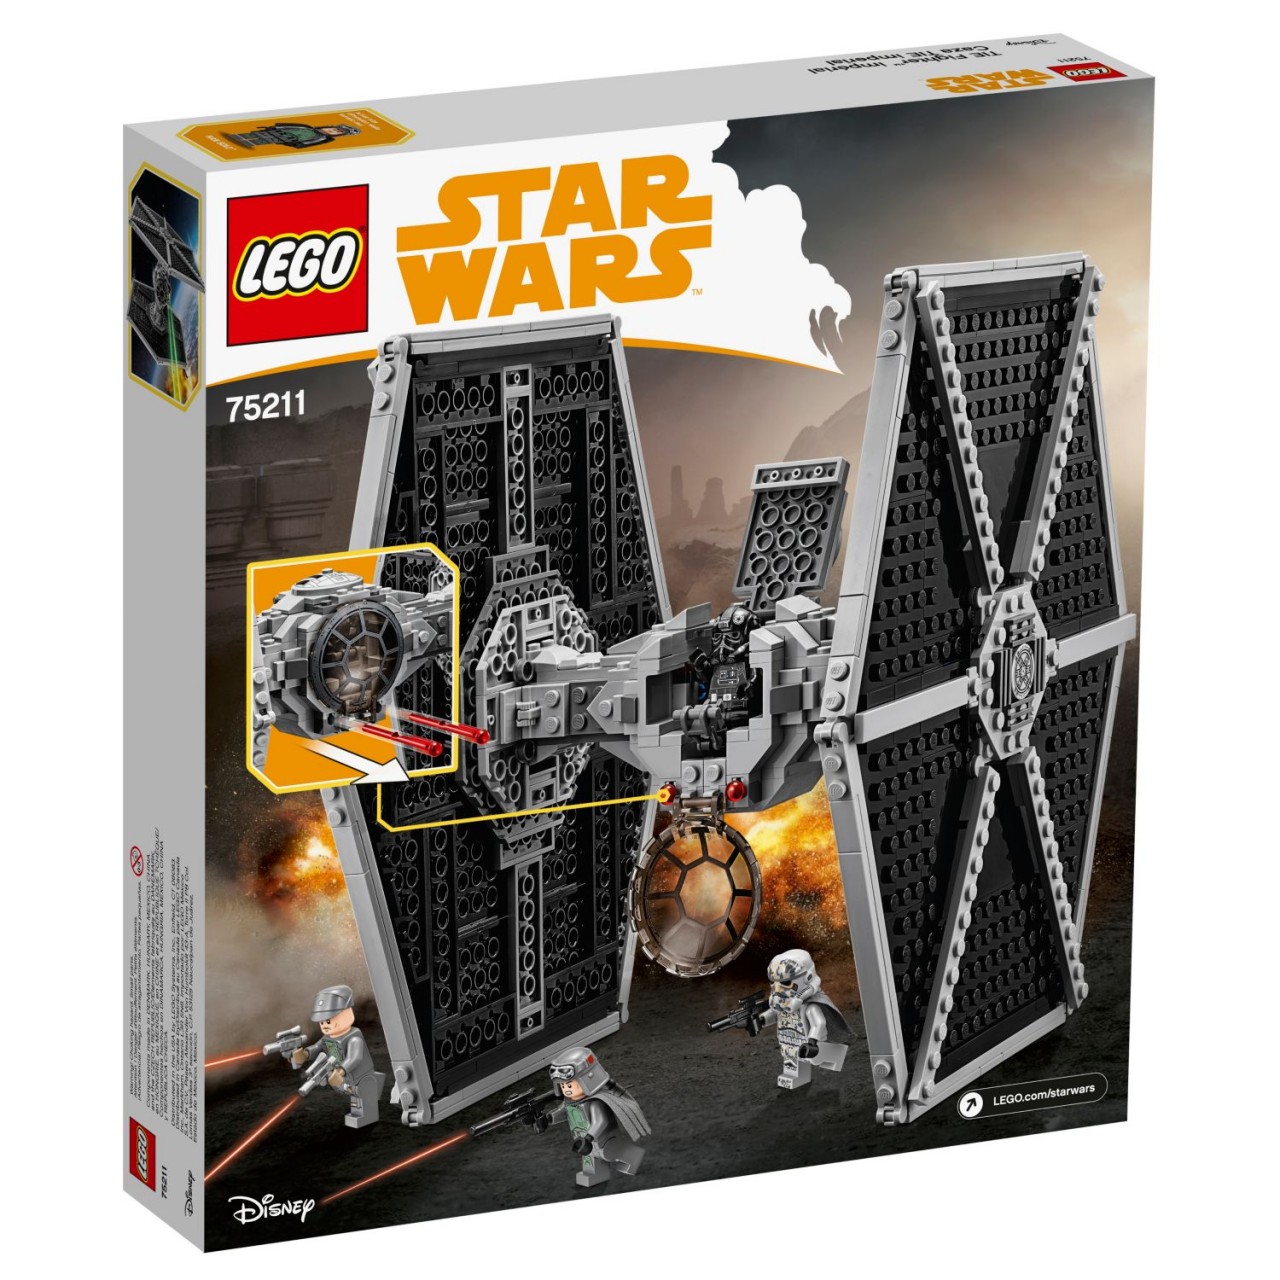 LEGO STAR WARS 75211 Imperial TIE Fighter